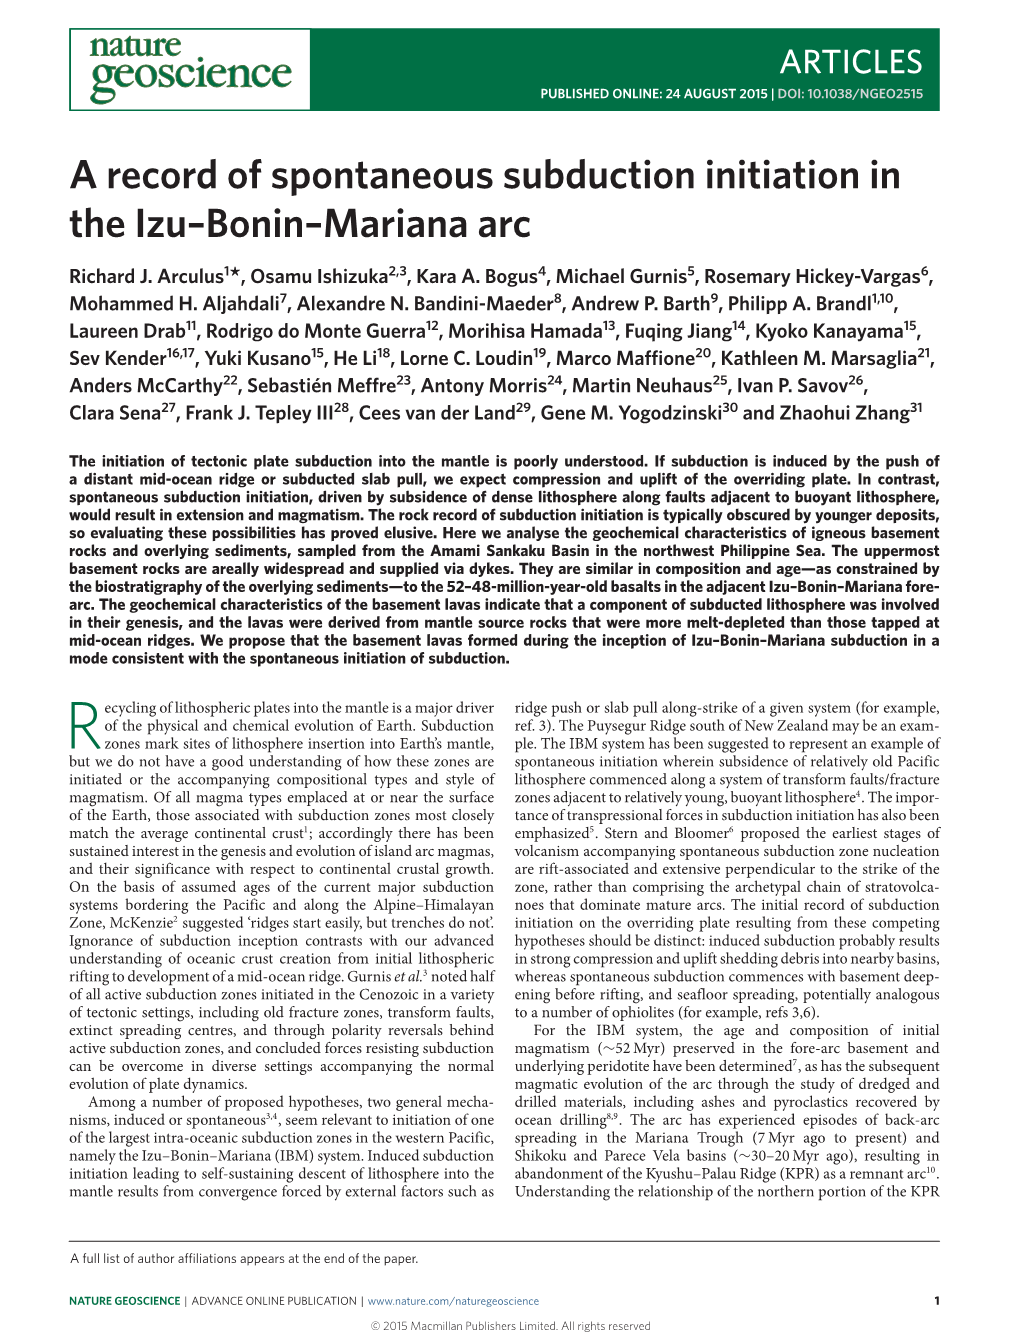 A Record of Spontaneous Subduction Initiation in the Izu–Bonin–Mariana Arc Richard J